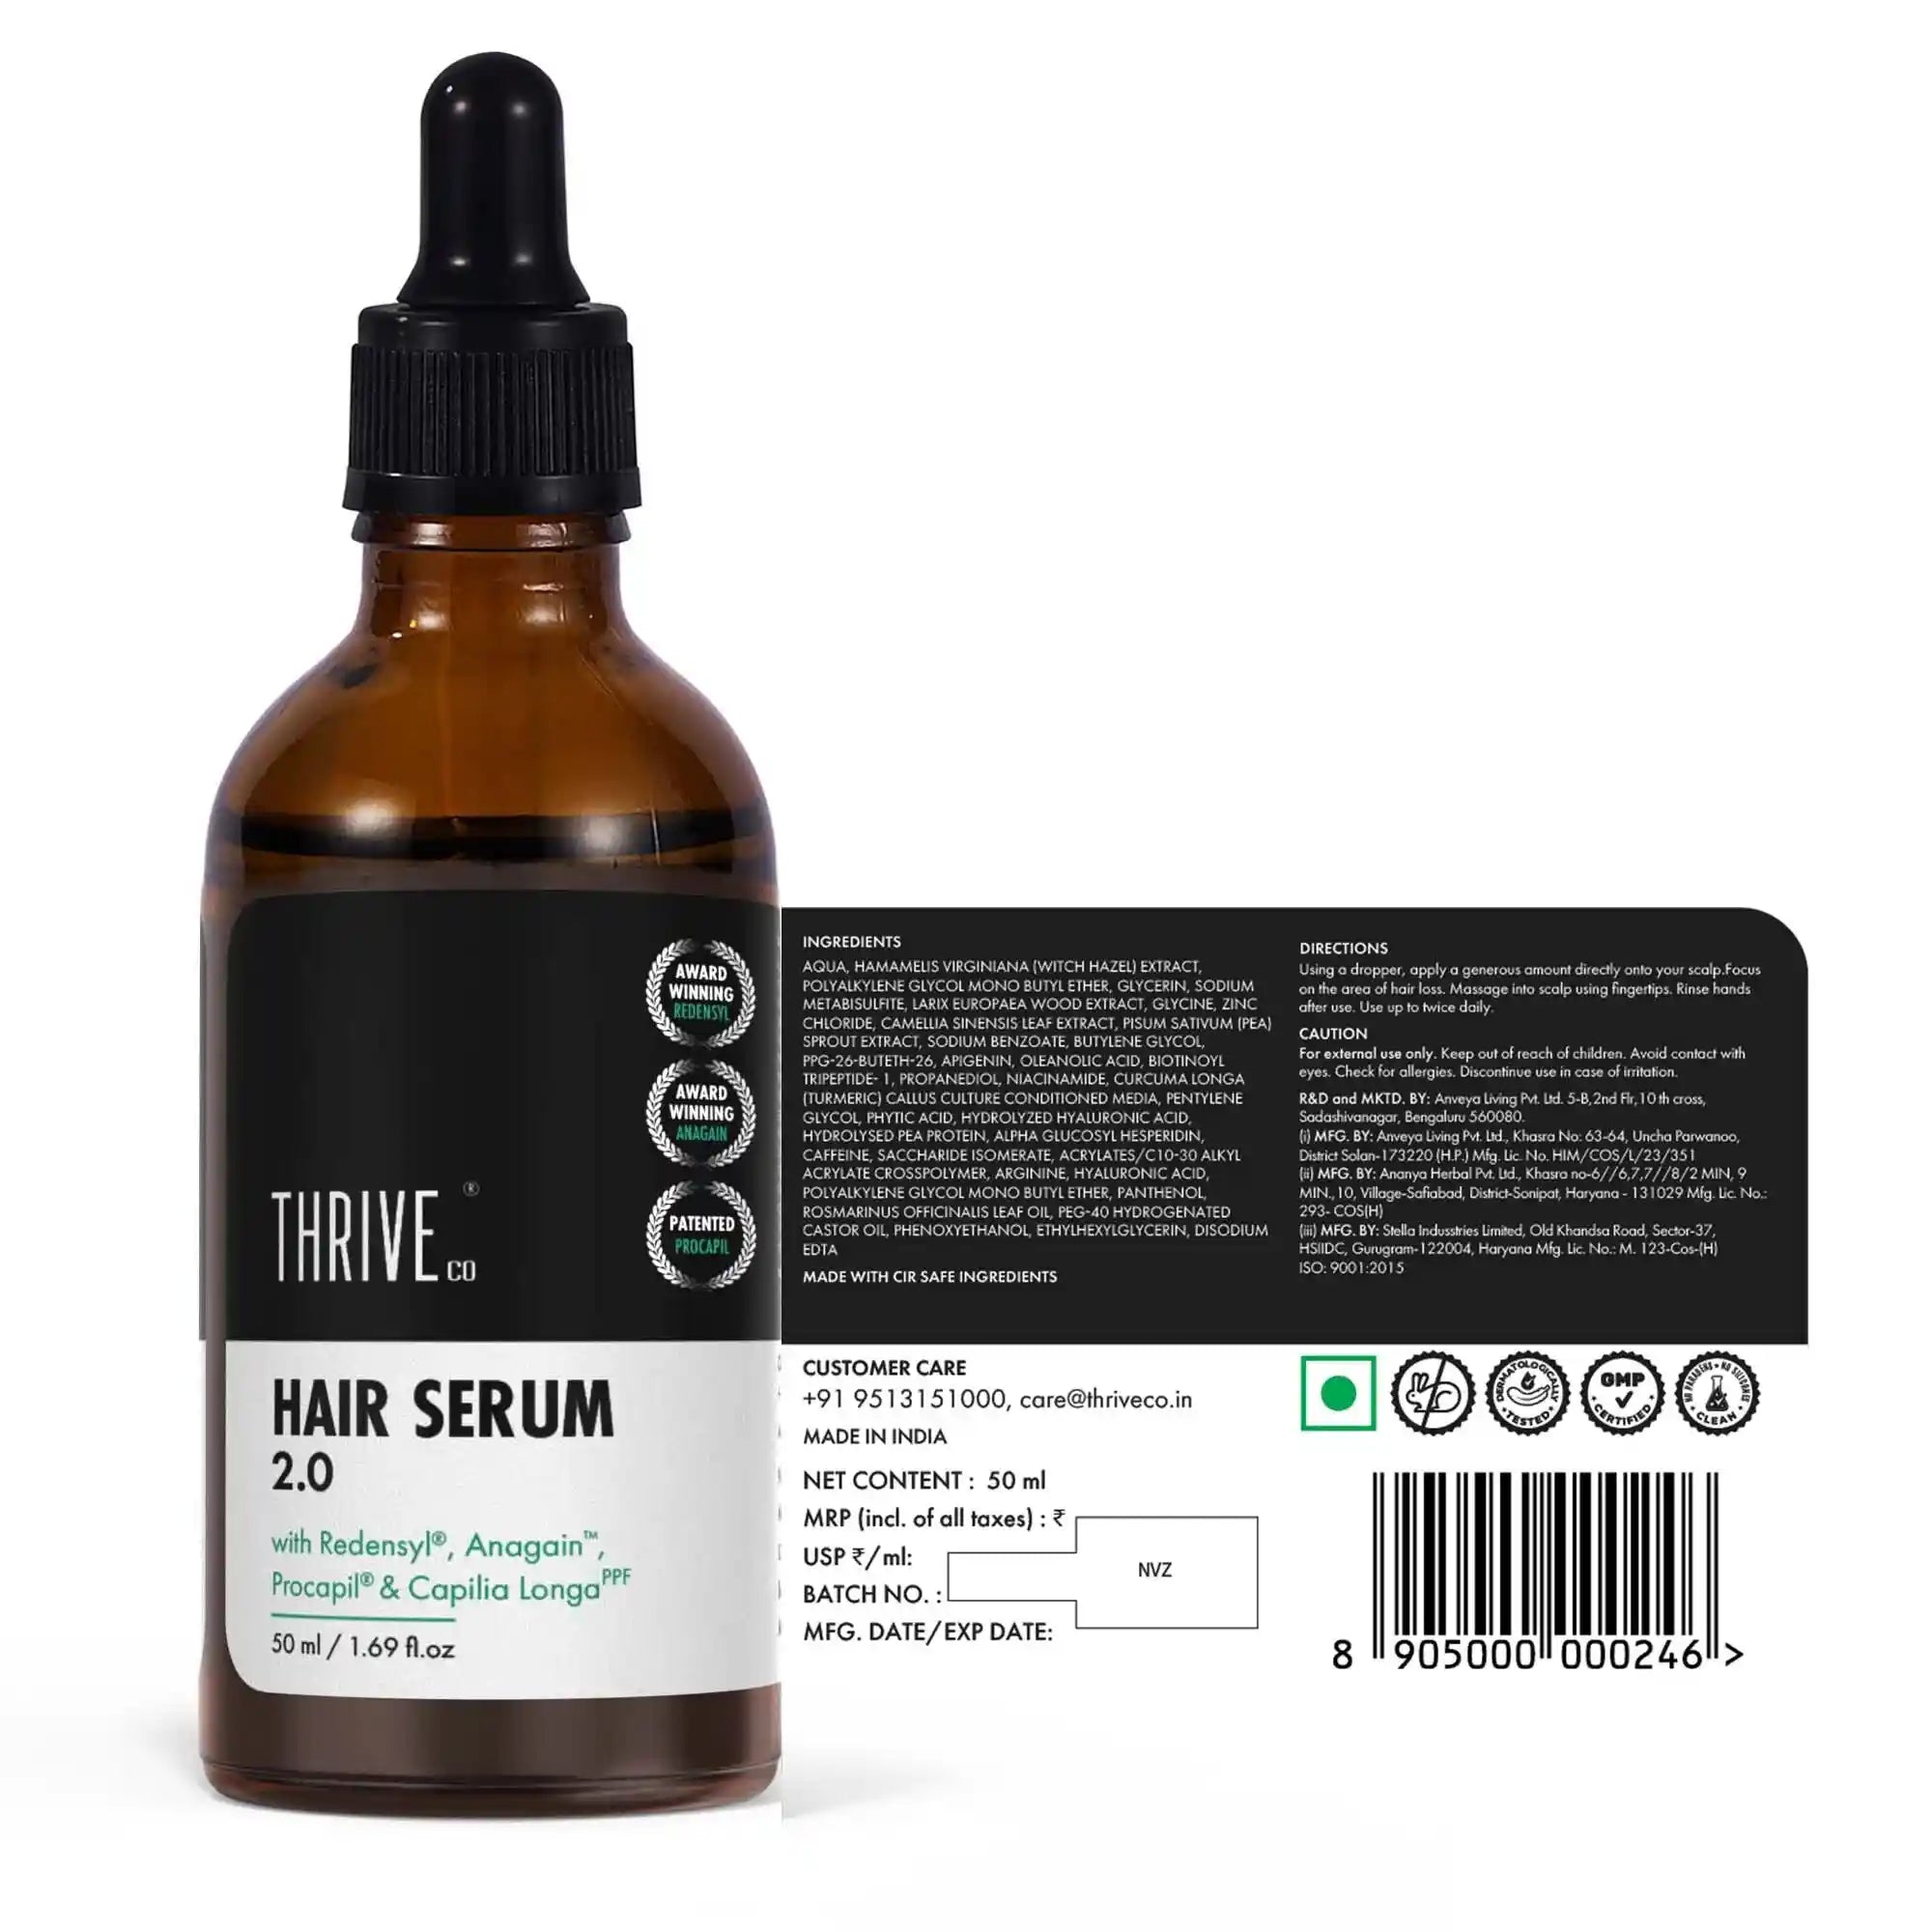 thriveco hair serum 2.0 for men